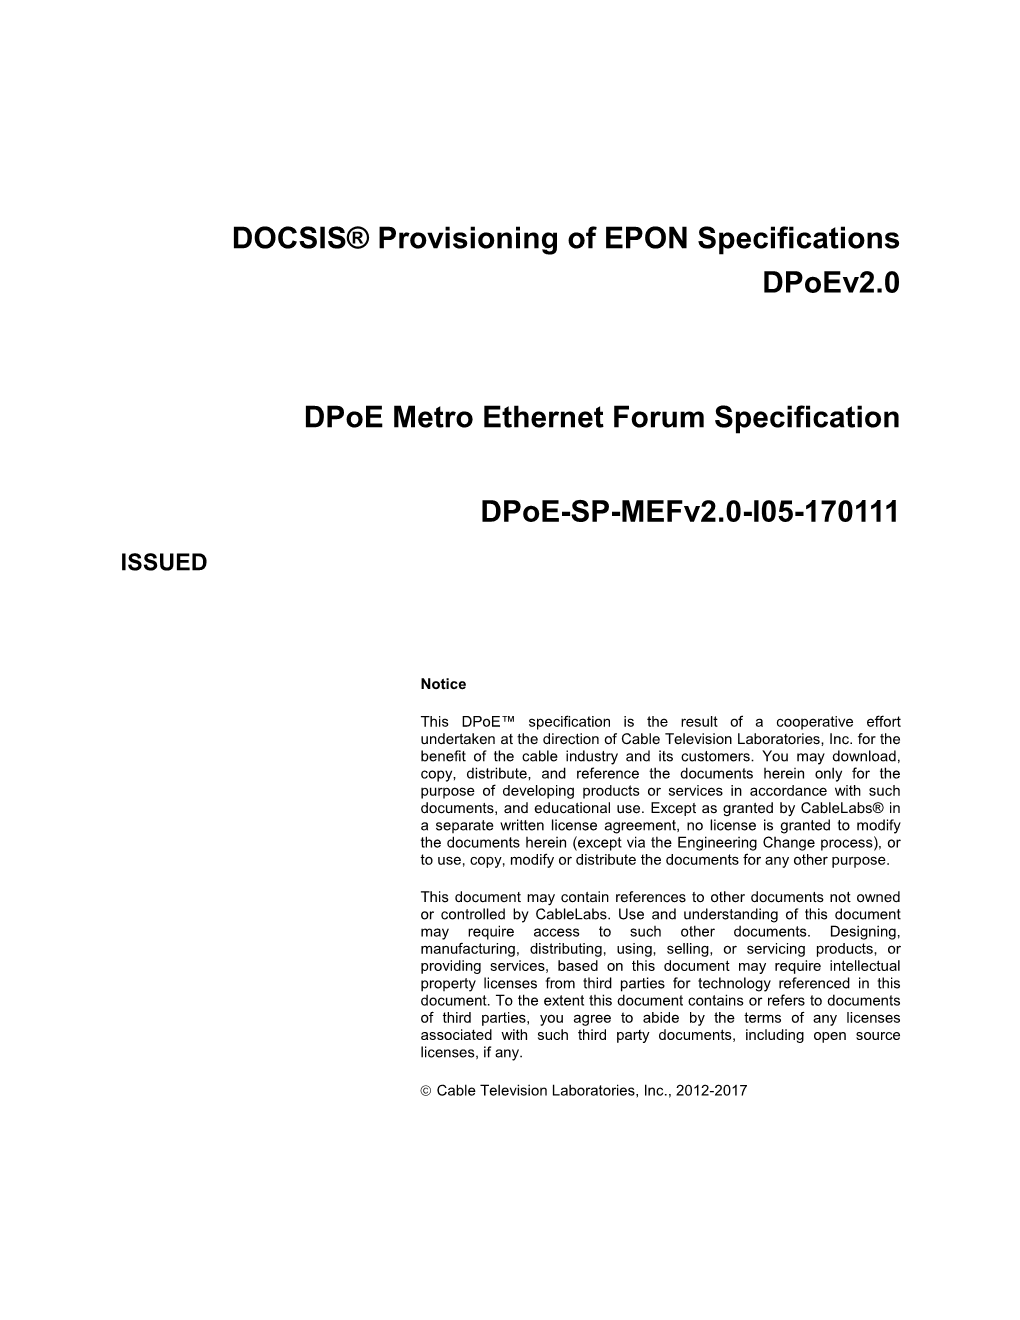 Dpoev2.0 Metro Ethernet Forum Specification